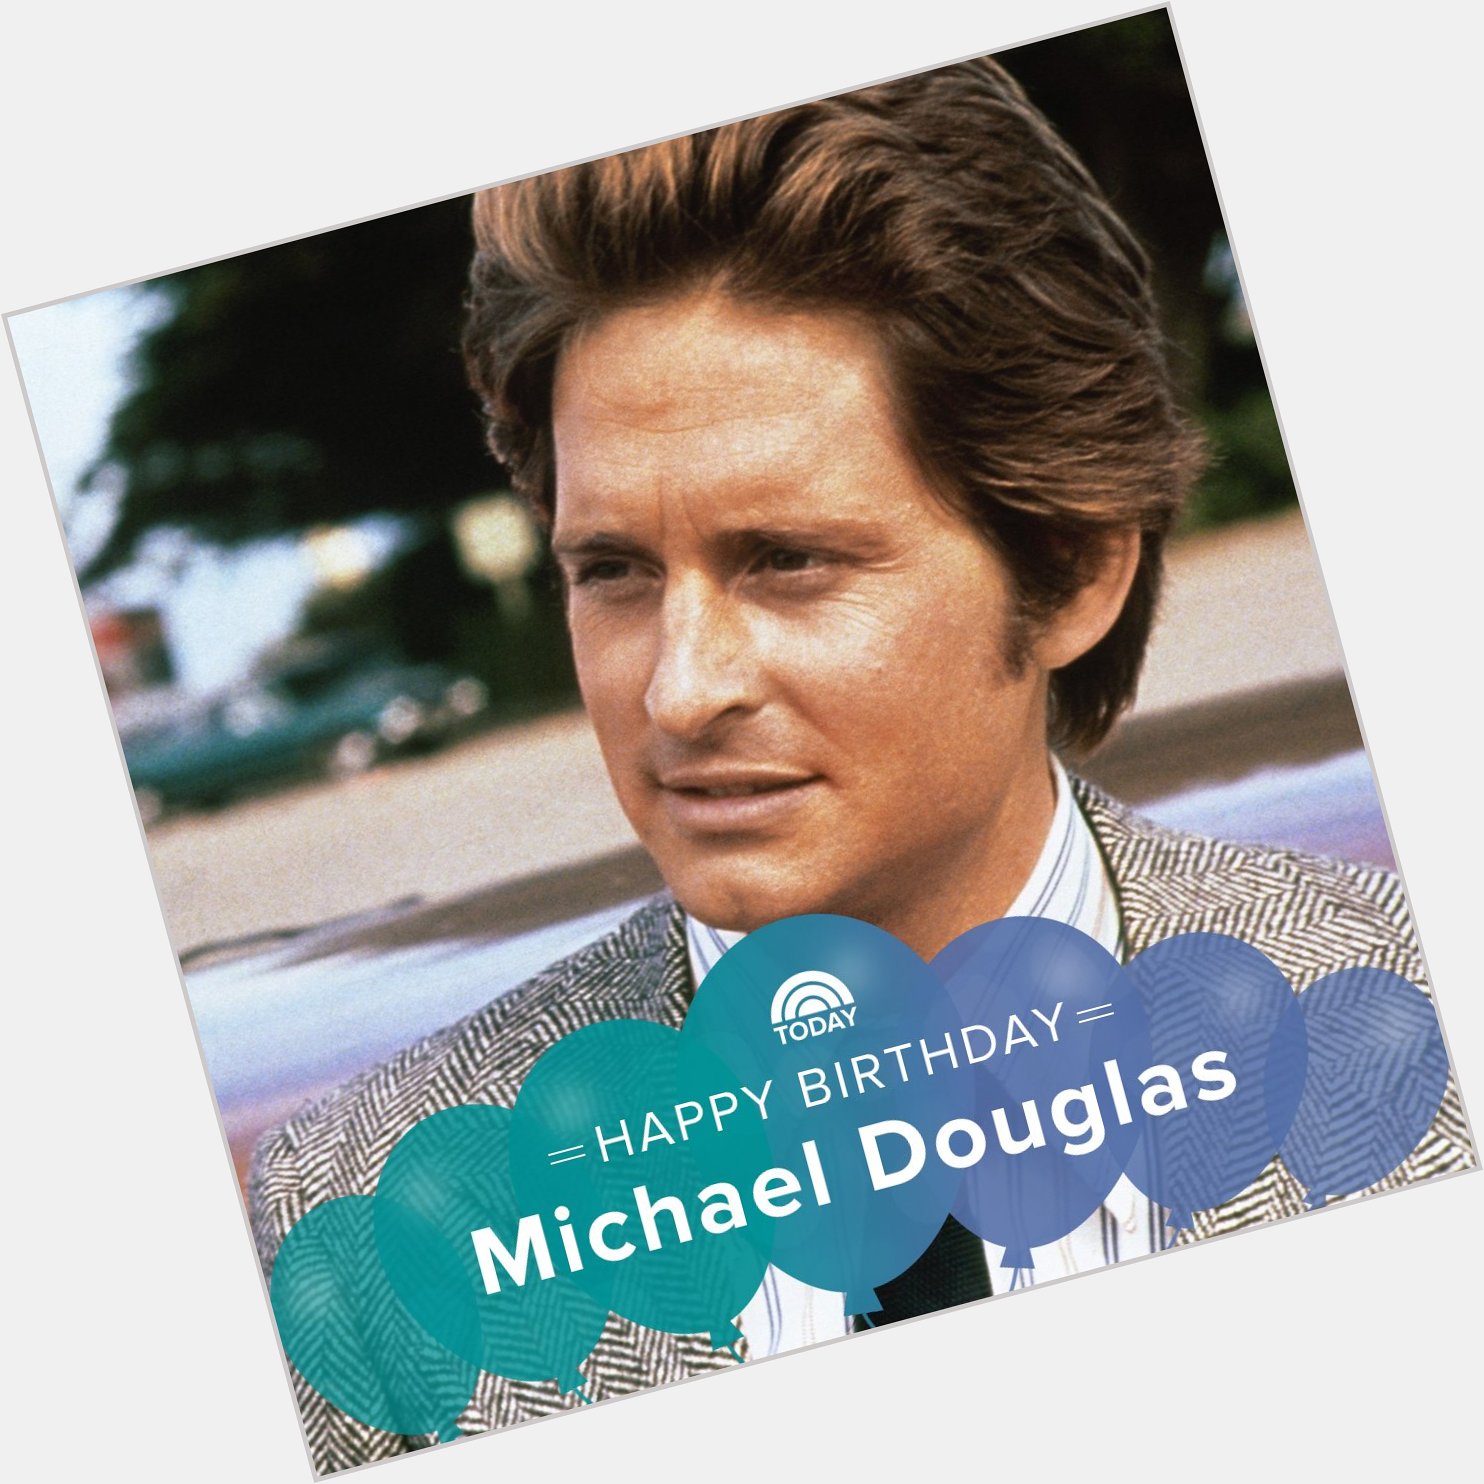 Happy birthday, Michael Douglas!  via TODAYshow